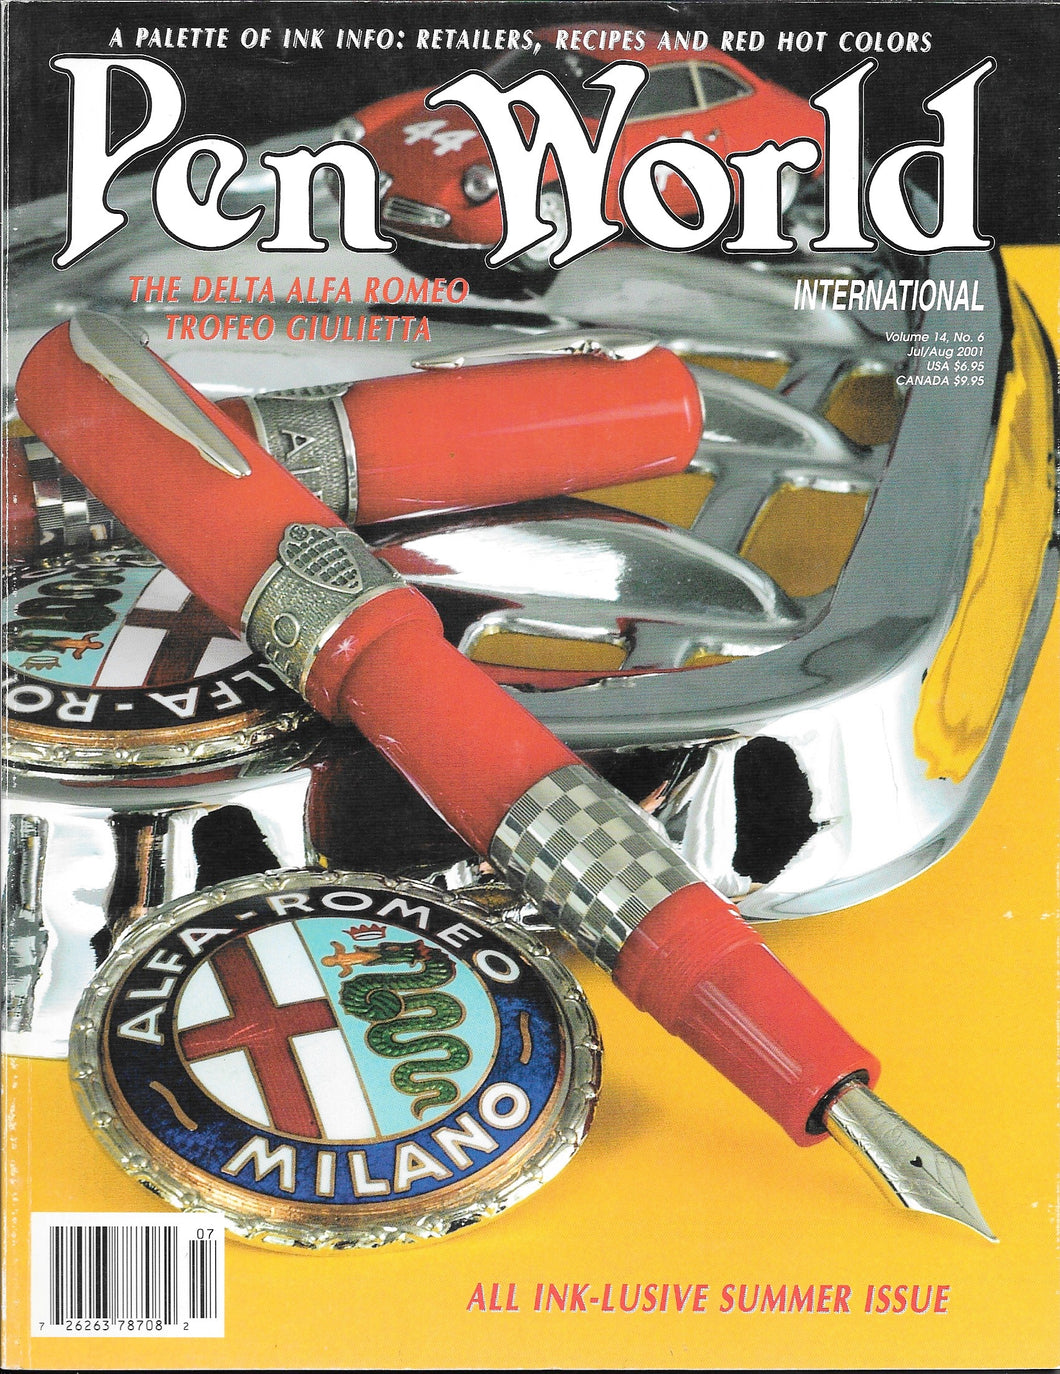 Pen World, Back Issues. Jul./Aug. 2001 Vol.14. No.6